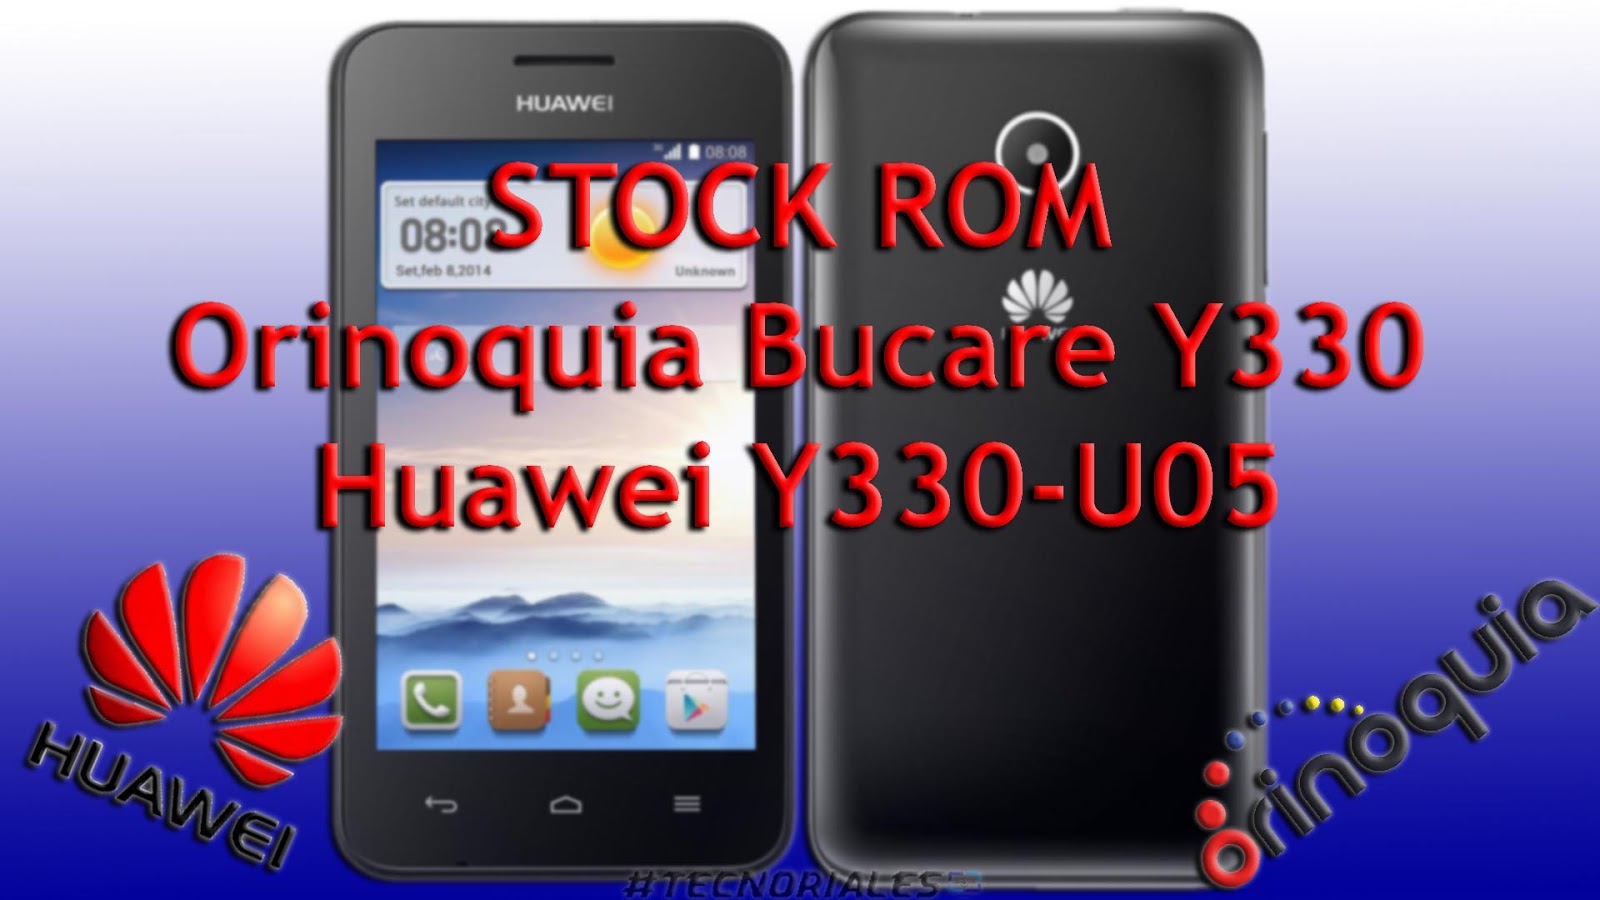 Instalar stock ROM: Orinoquia Bucare / Huawei Y330-U05